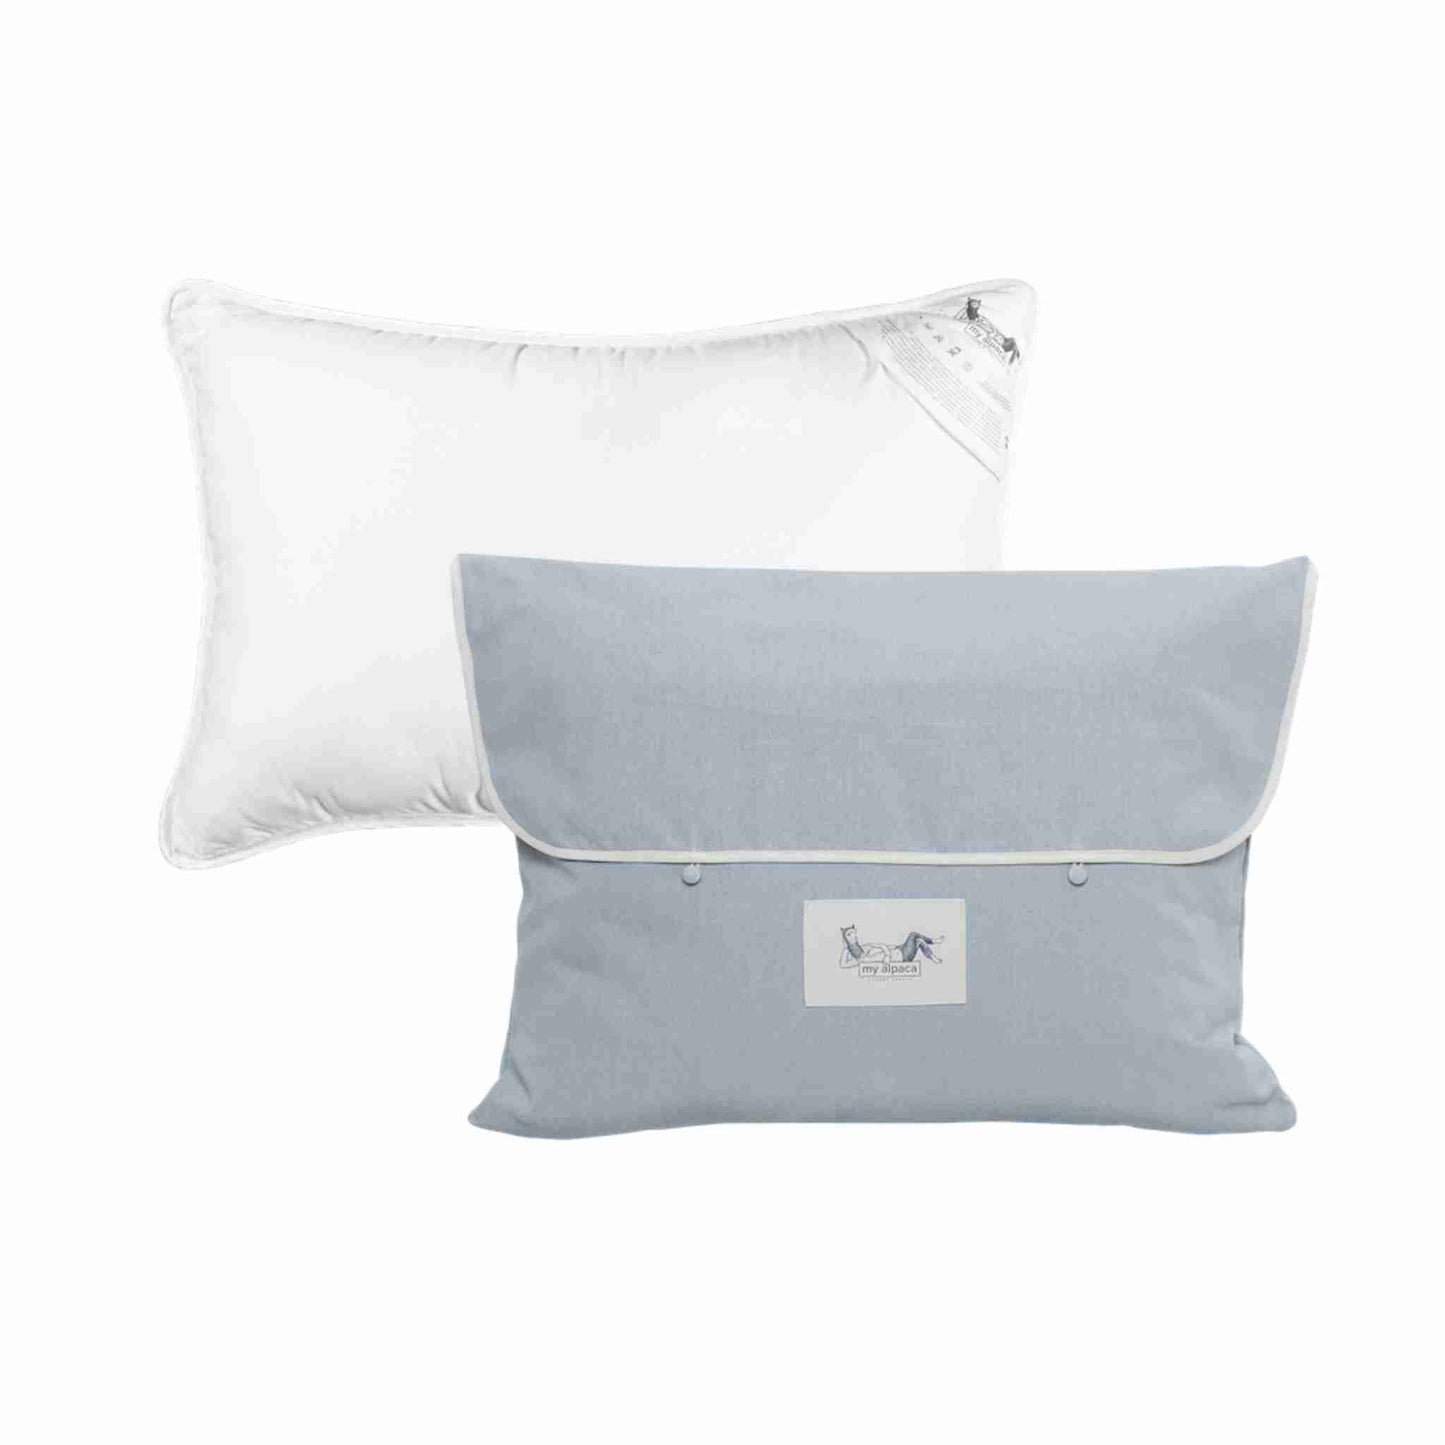 ÉTAUDORÉ MyAlpaca alpaca pillow with case, filled with 100% alpaca fibre, hypoallergenic & thermoregulatory